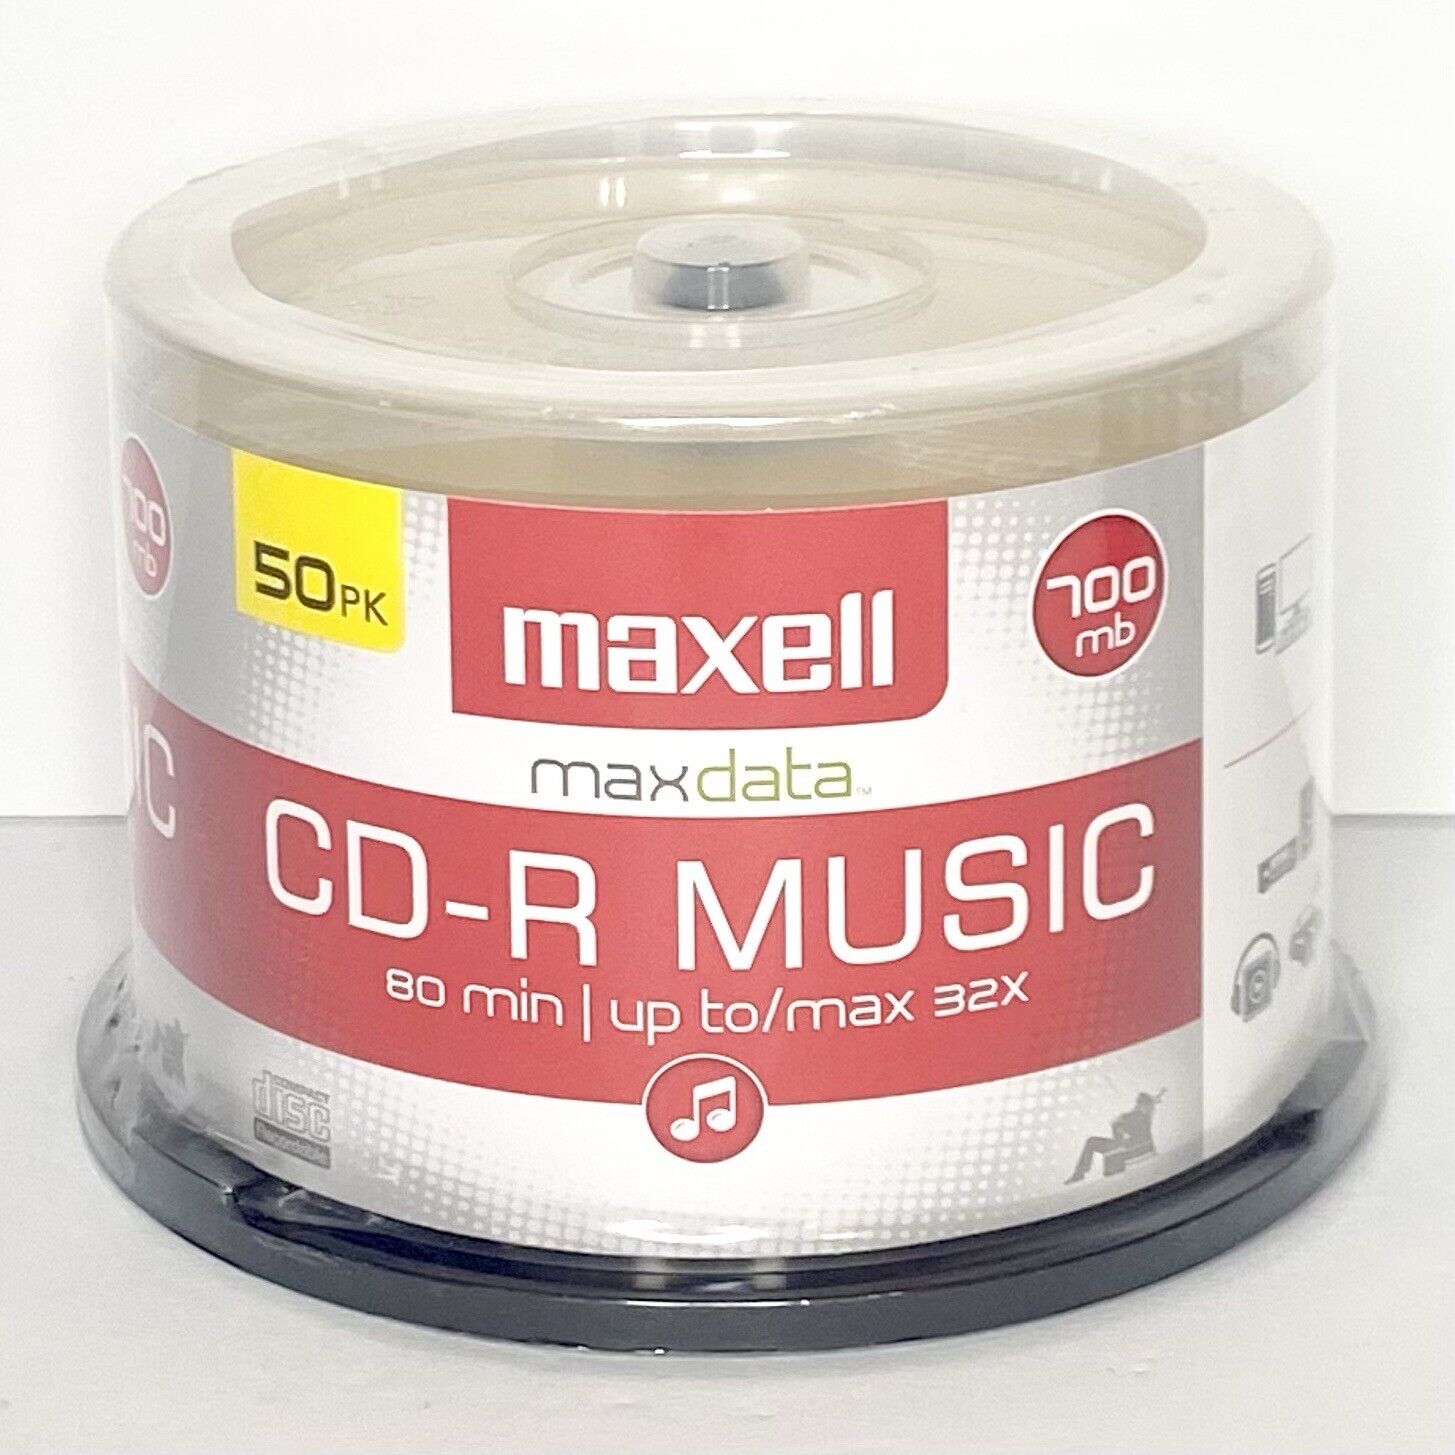 Maxell CD-R Music MaxData 50pk Spindle 80min 700MB New/Sealed